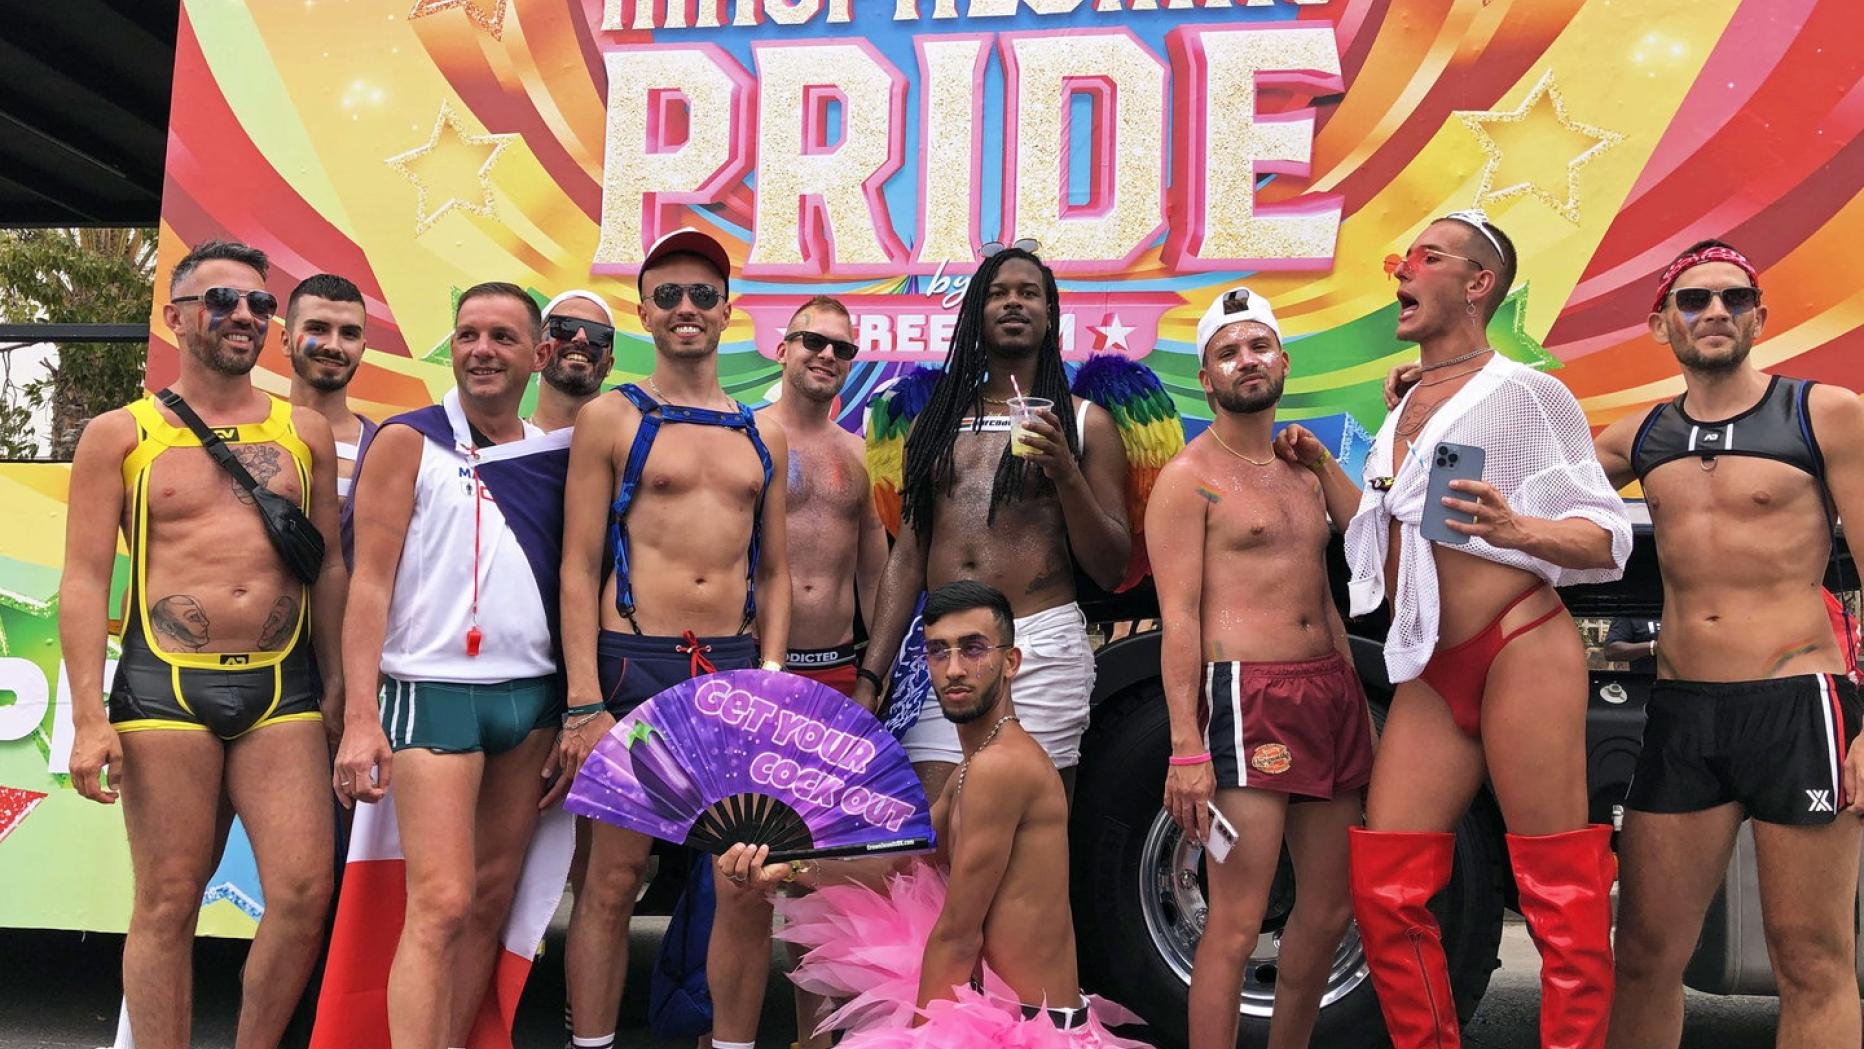 места встречи геев в петербурге фото 32